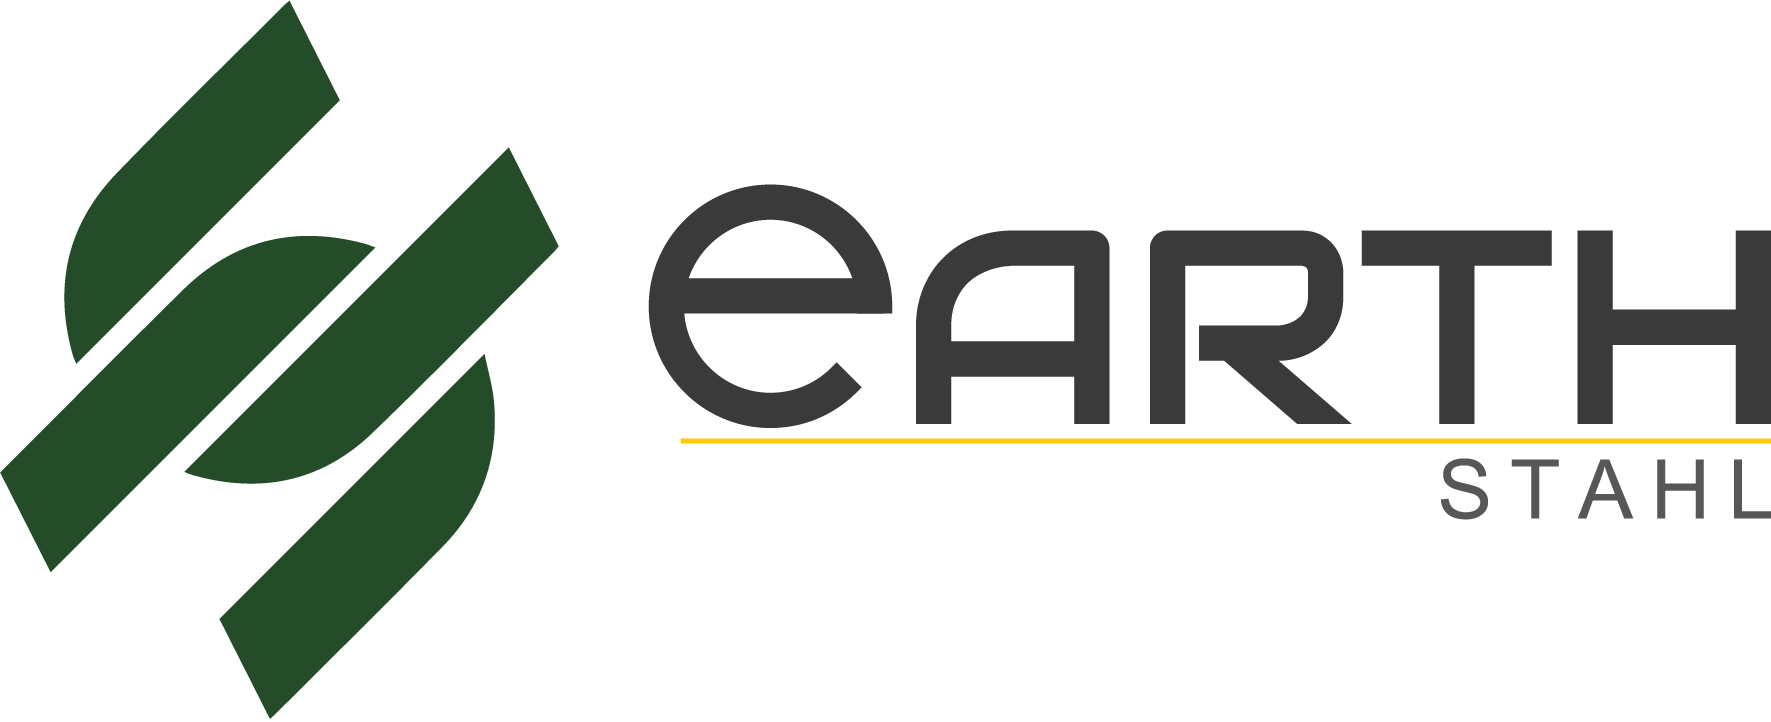 Earthstahl & Alloys Limited Logo